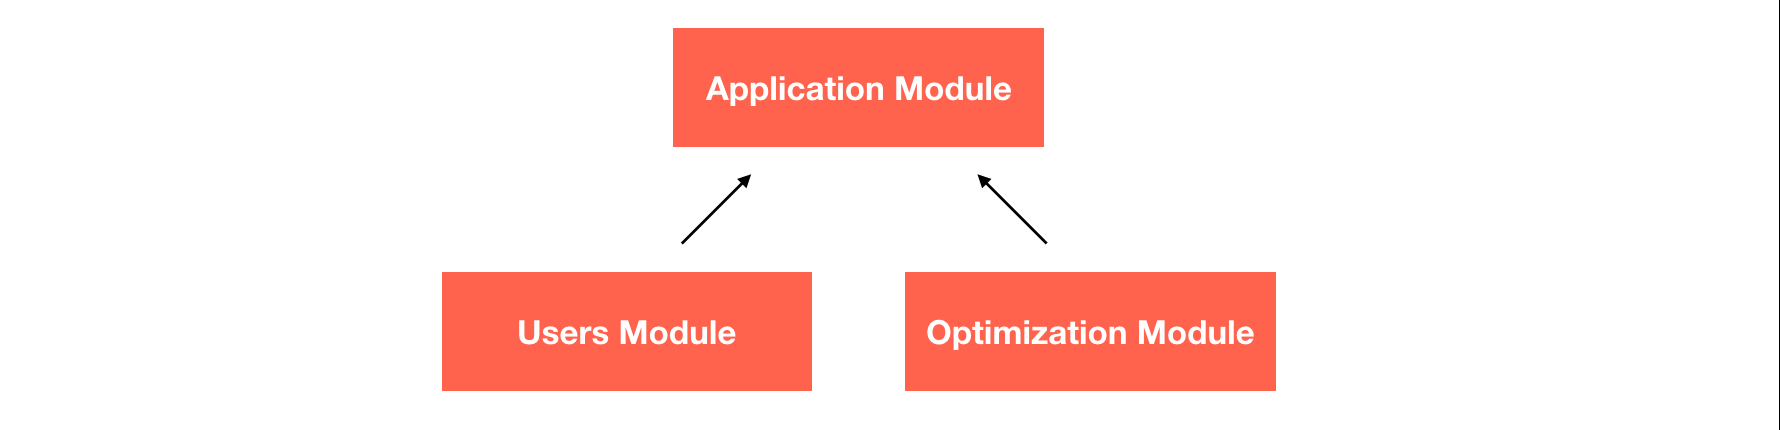 nestjs code structure and organization into module